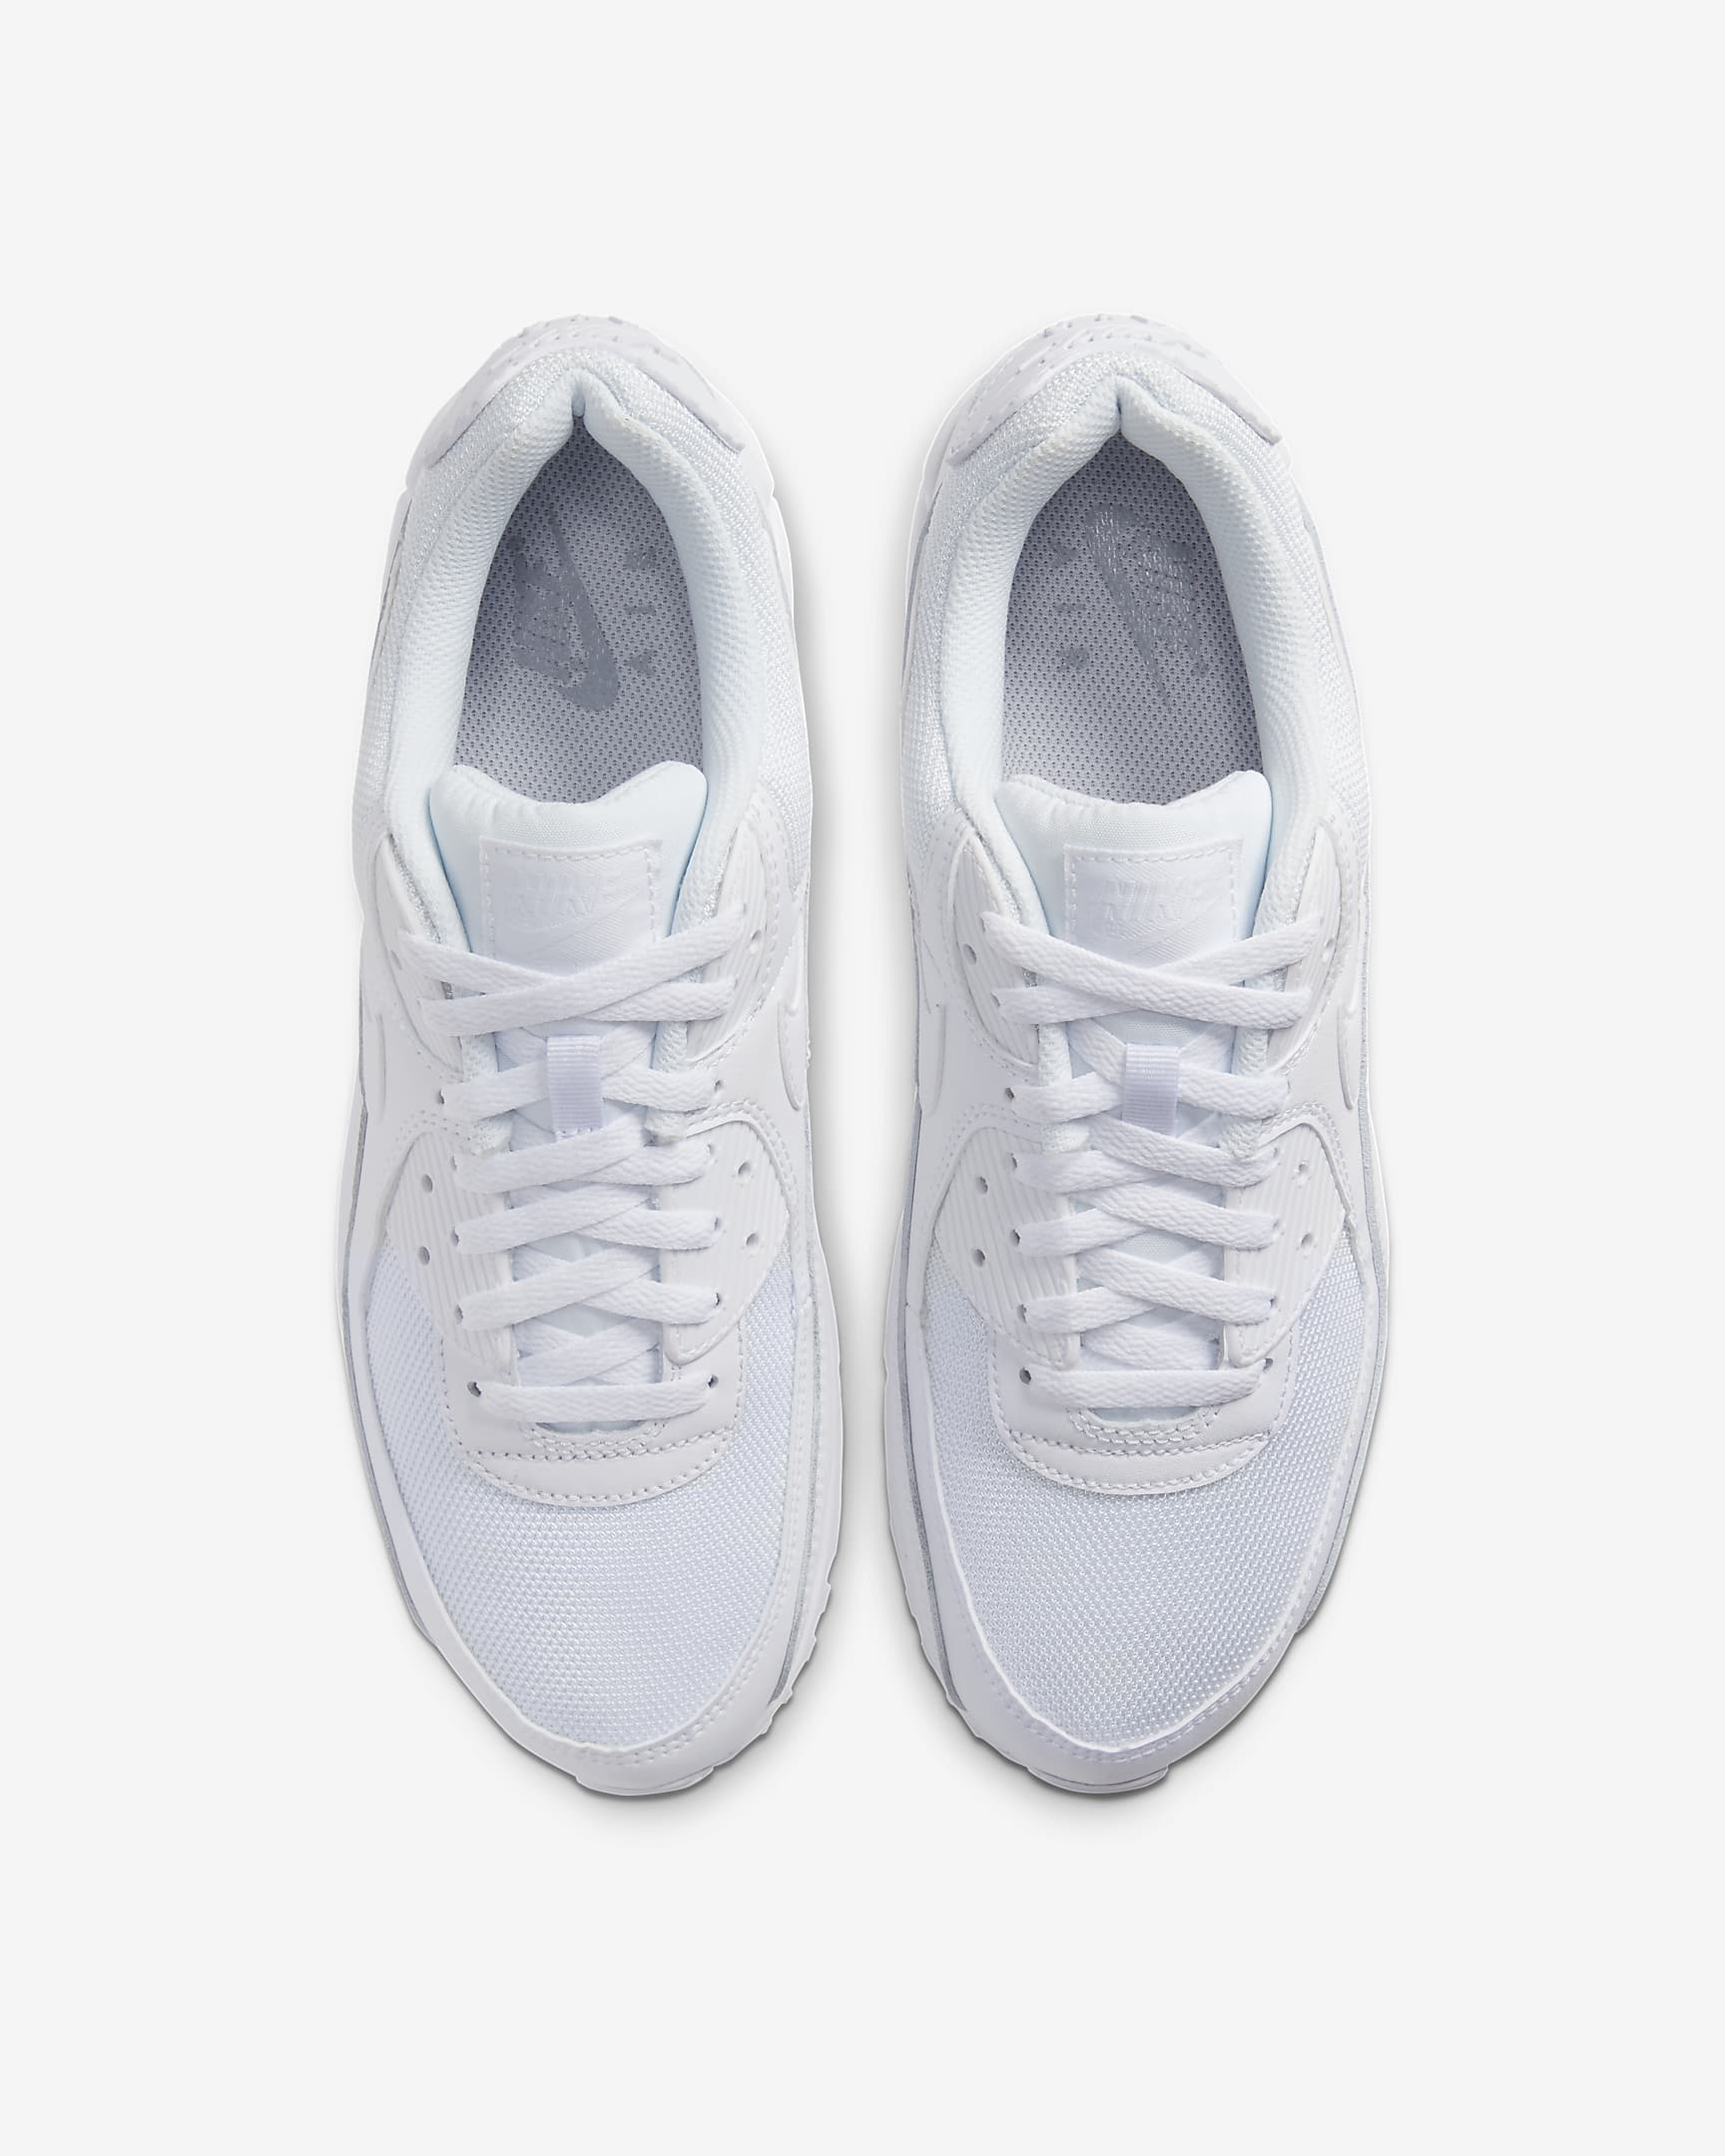 Chaussure Nike Air Max 90 pour Homme - Blanc/Blanc/Wolf Grey/Blanc